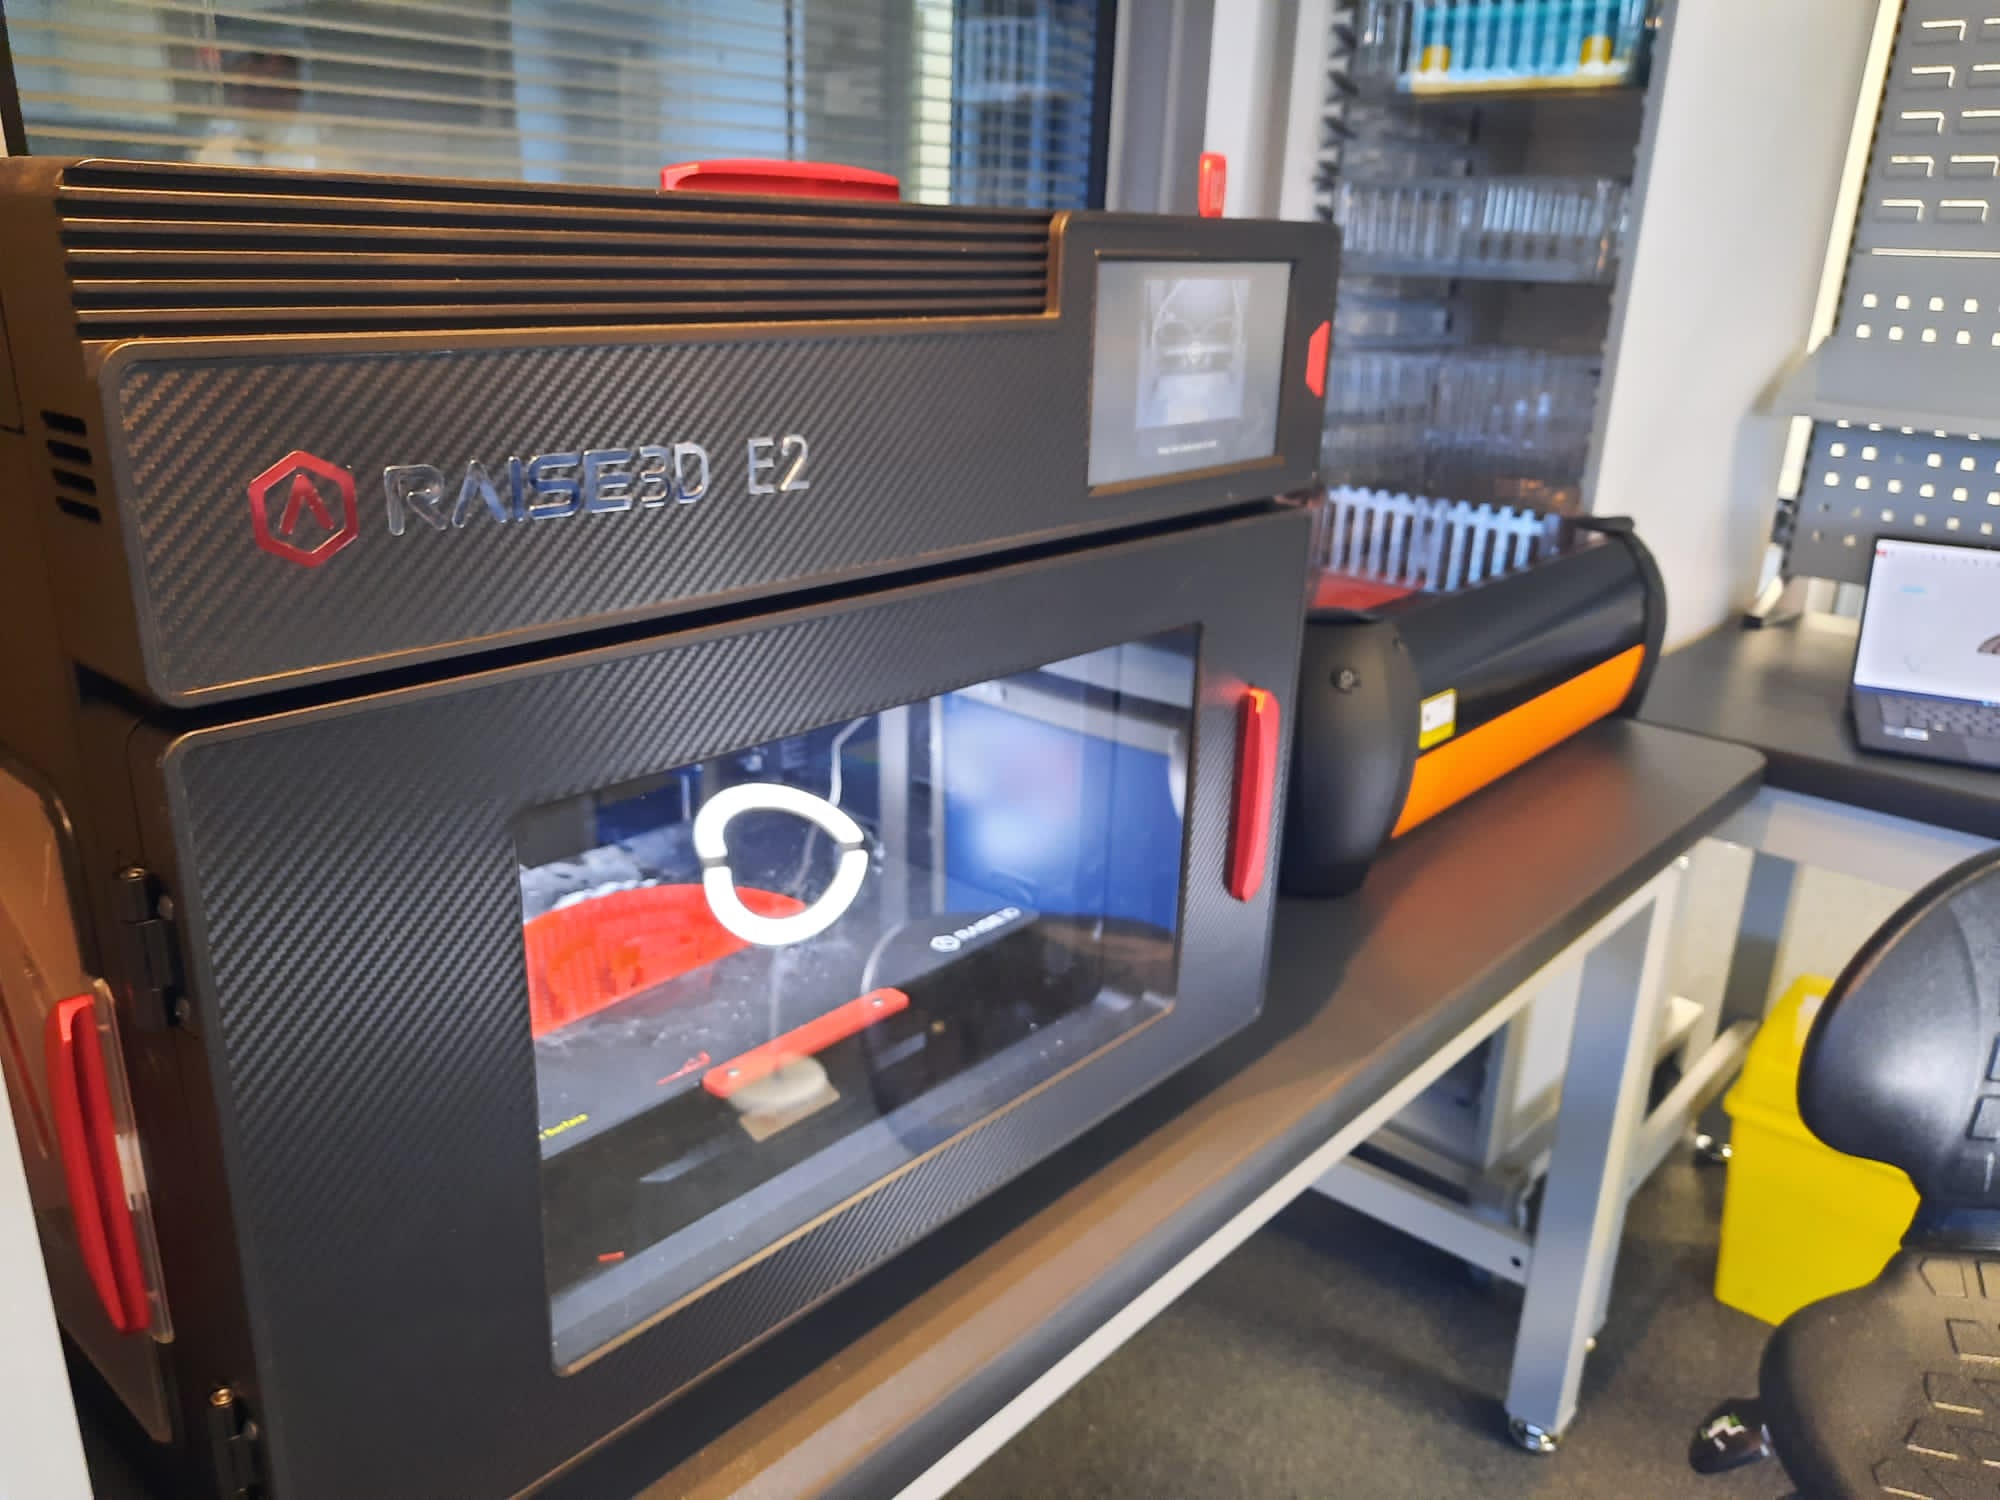 3D Printer on desk